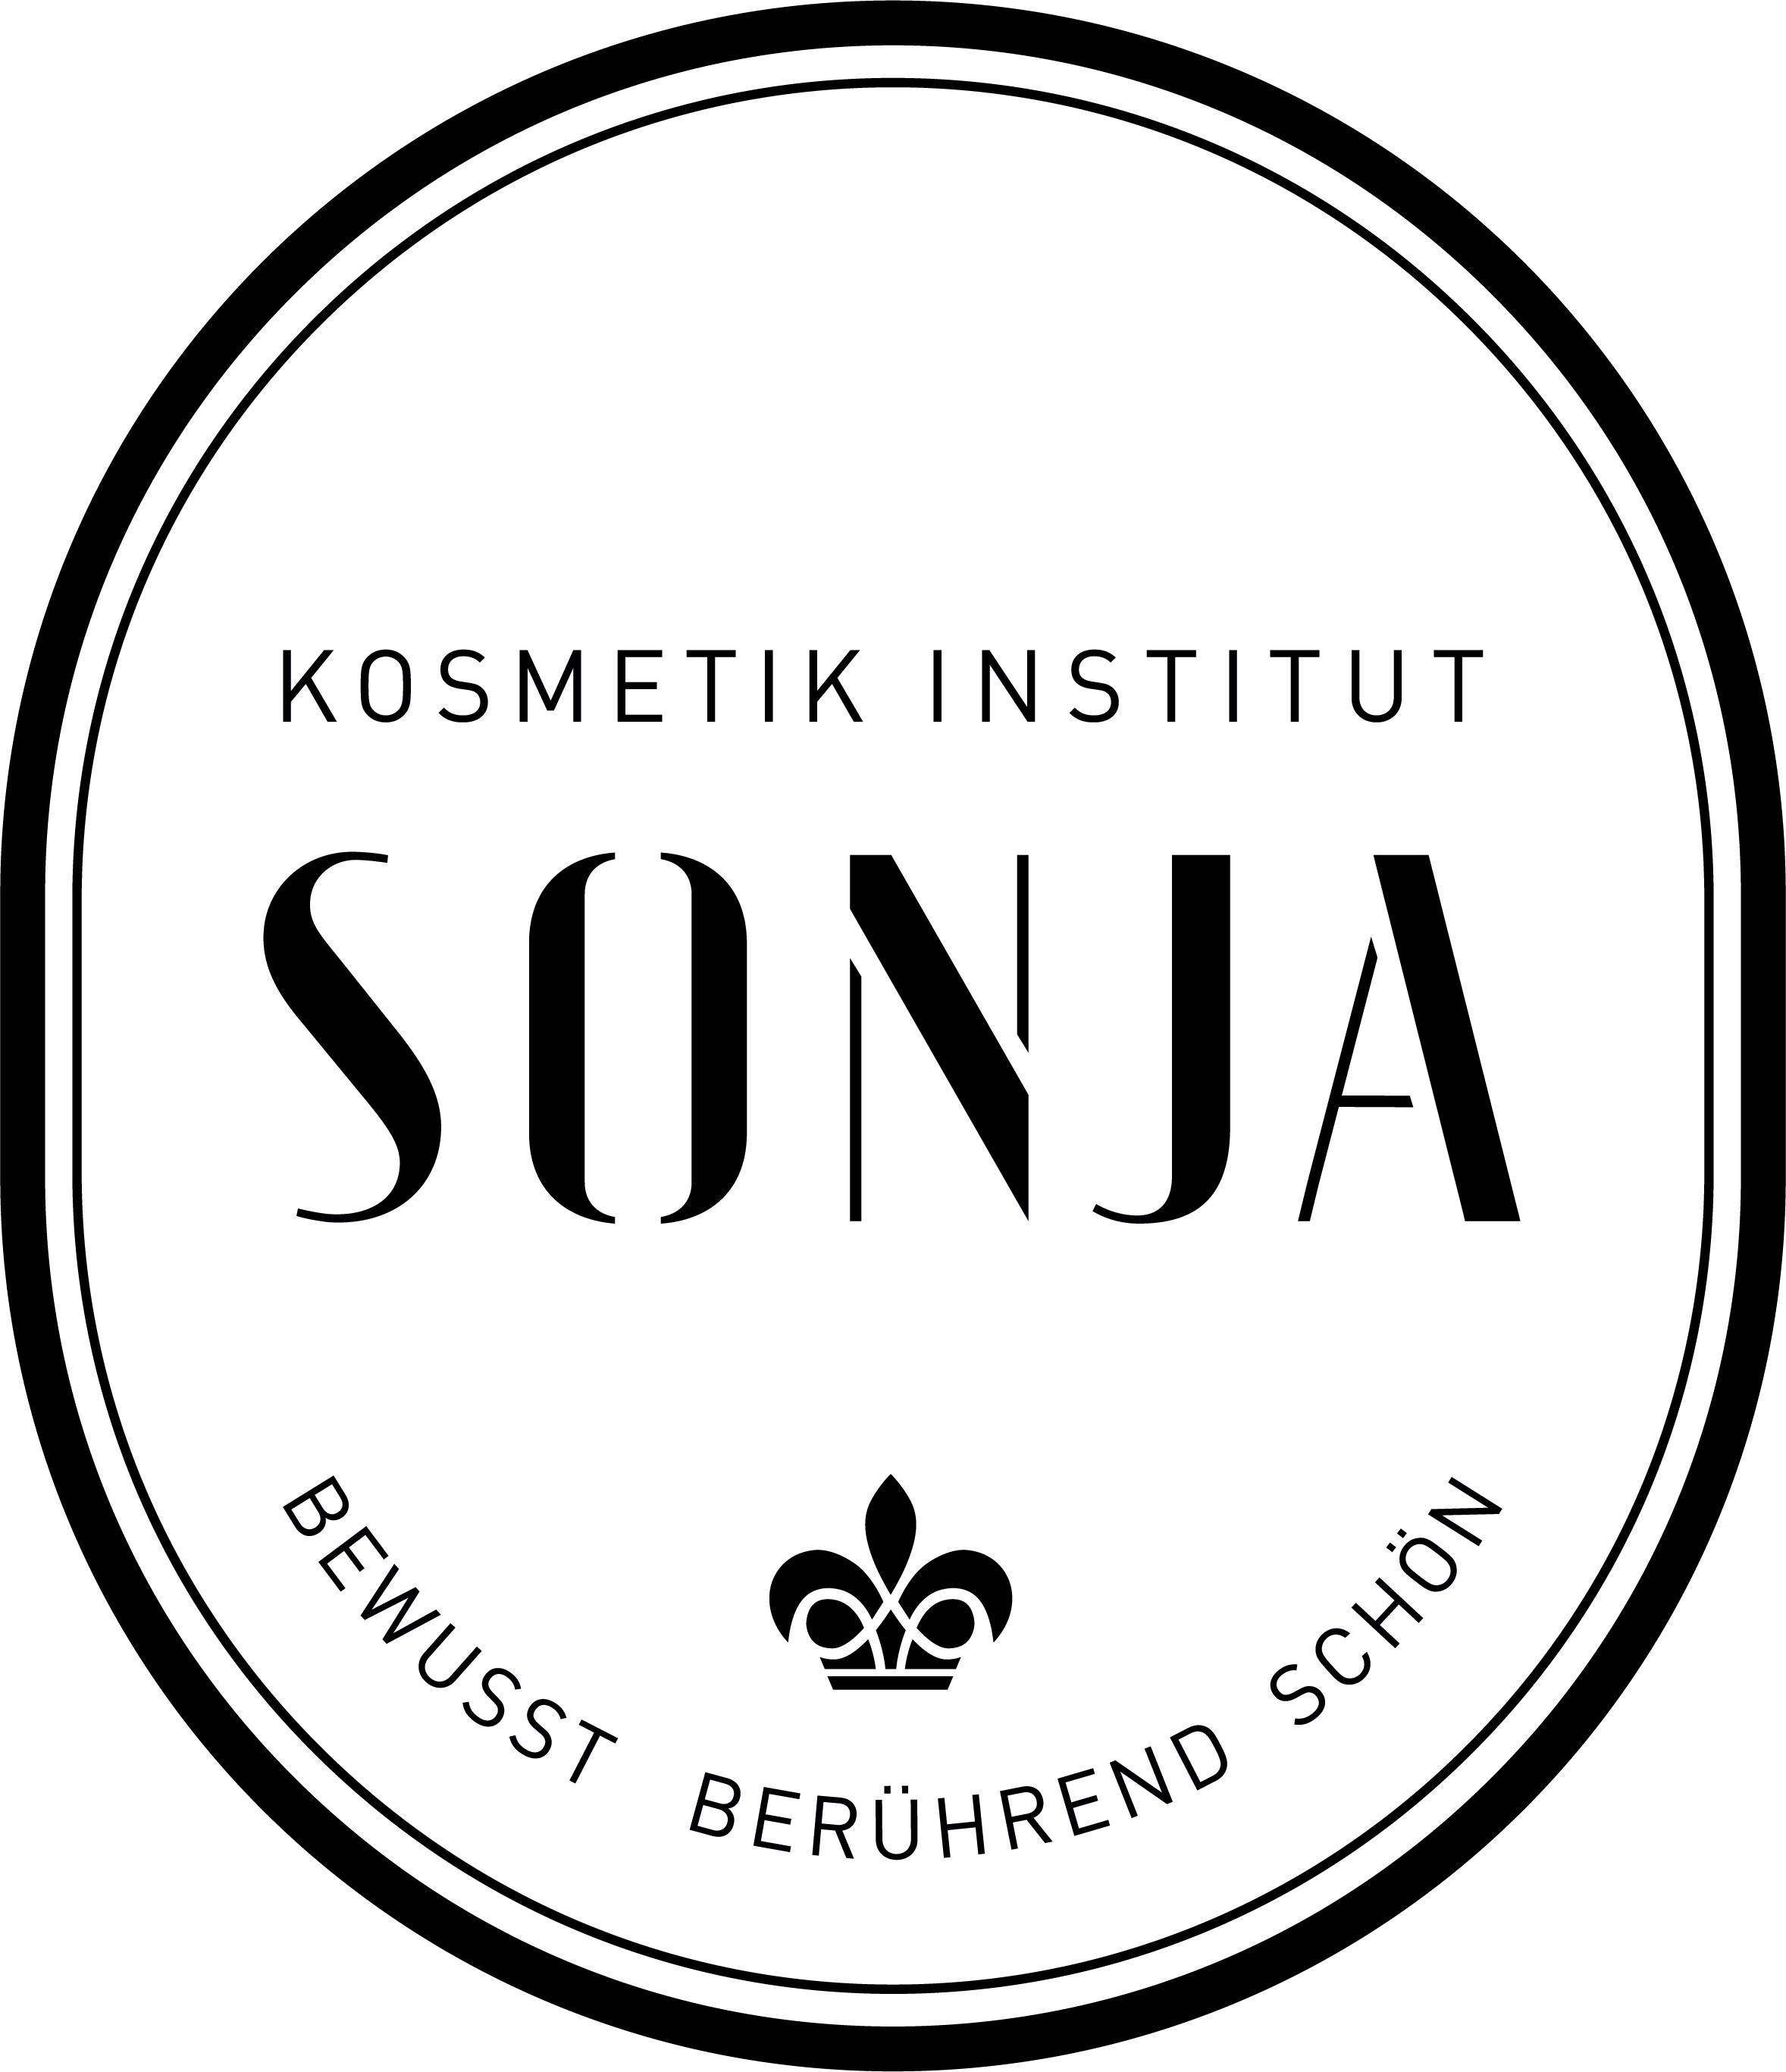  Kosmetik Institut Sonja